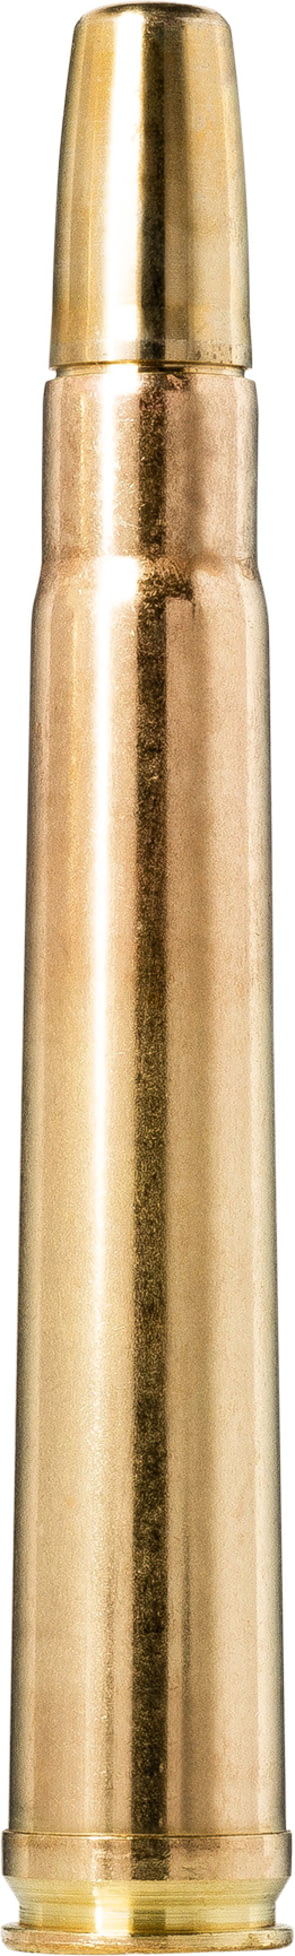 Norma Solid Ammunition .375 H&H Magnum 300 Grain Solid Brass Cased Centerfire Rifle Ammunition